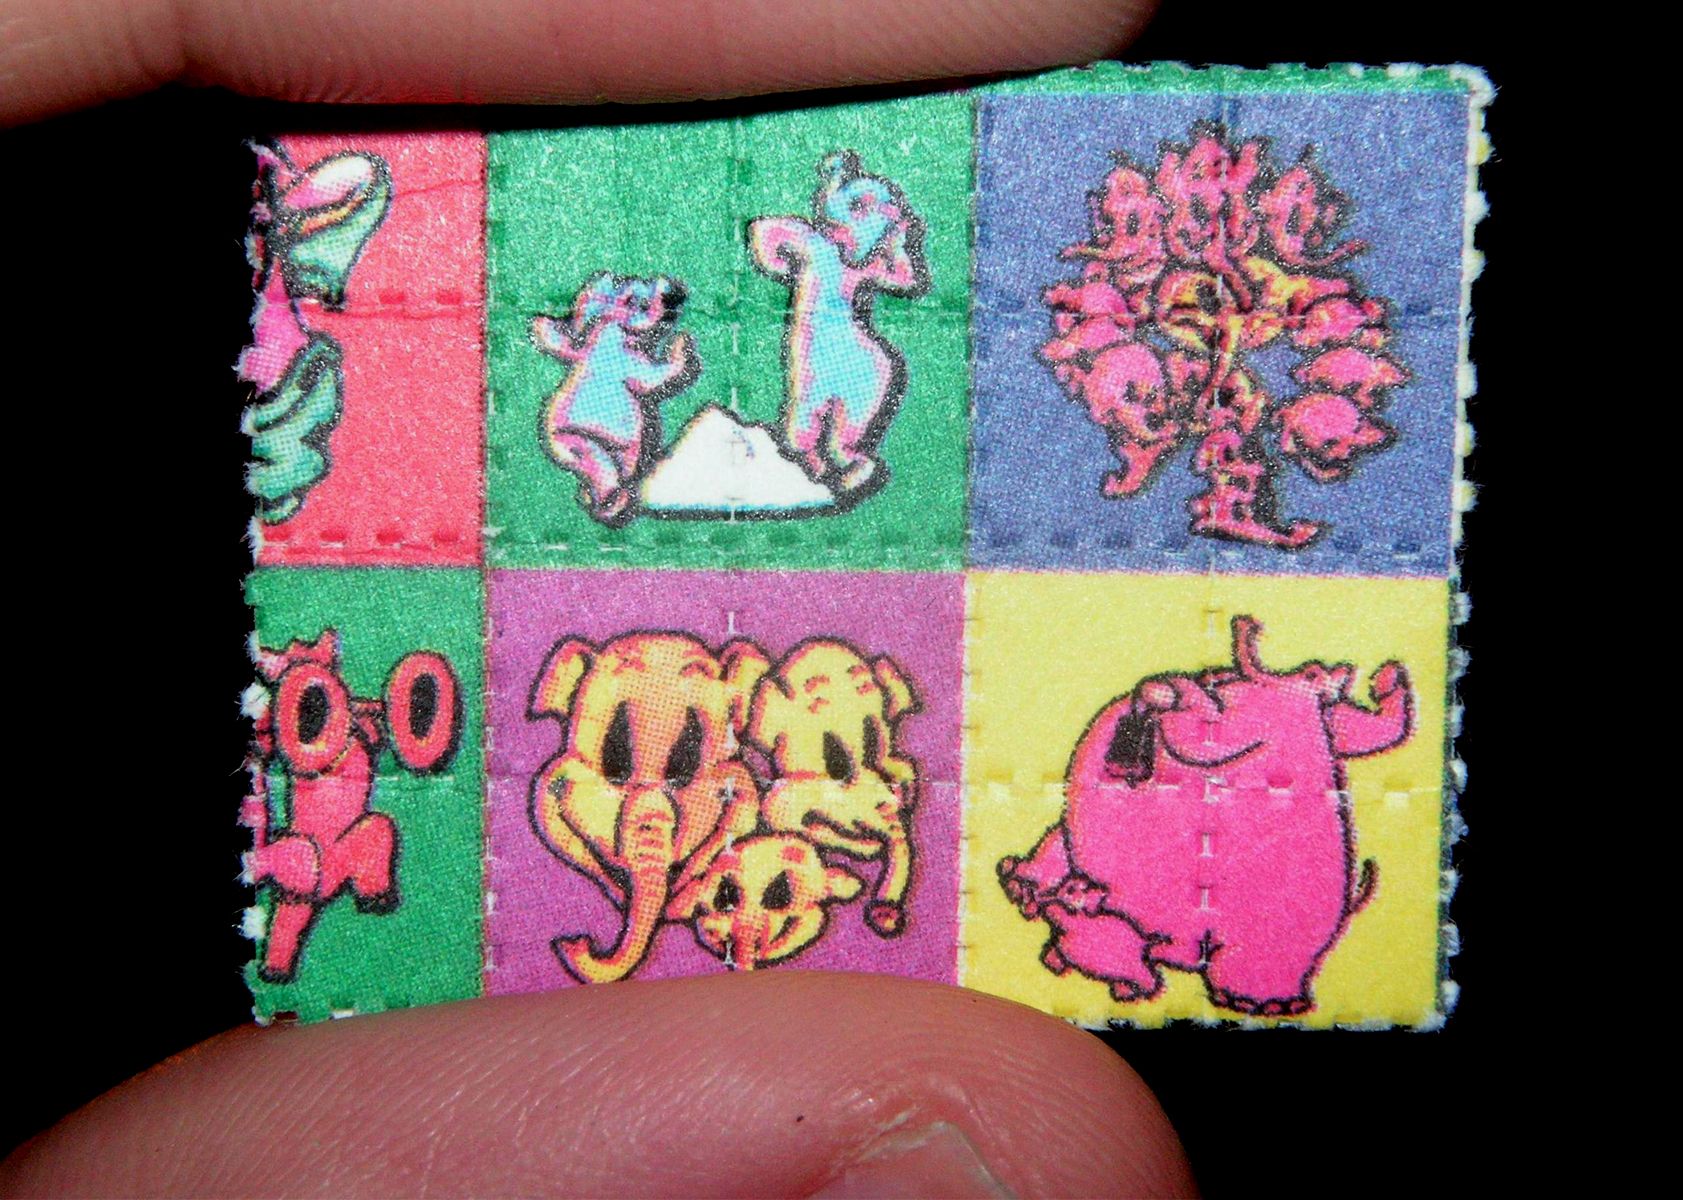 LSD tests that heralded Denmark’s second age of enlightenment